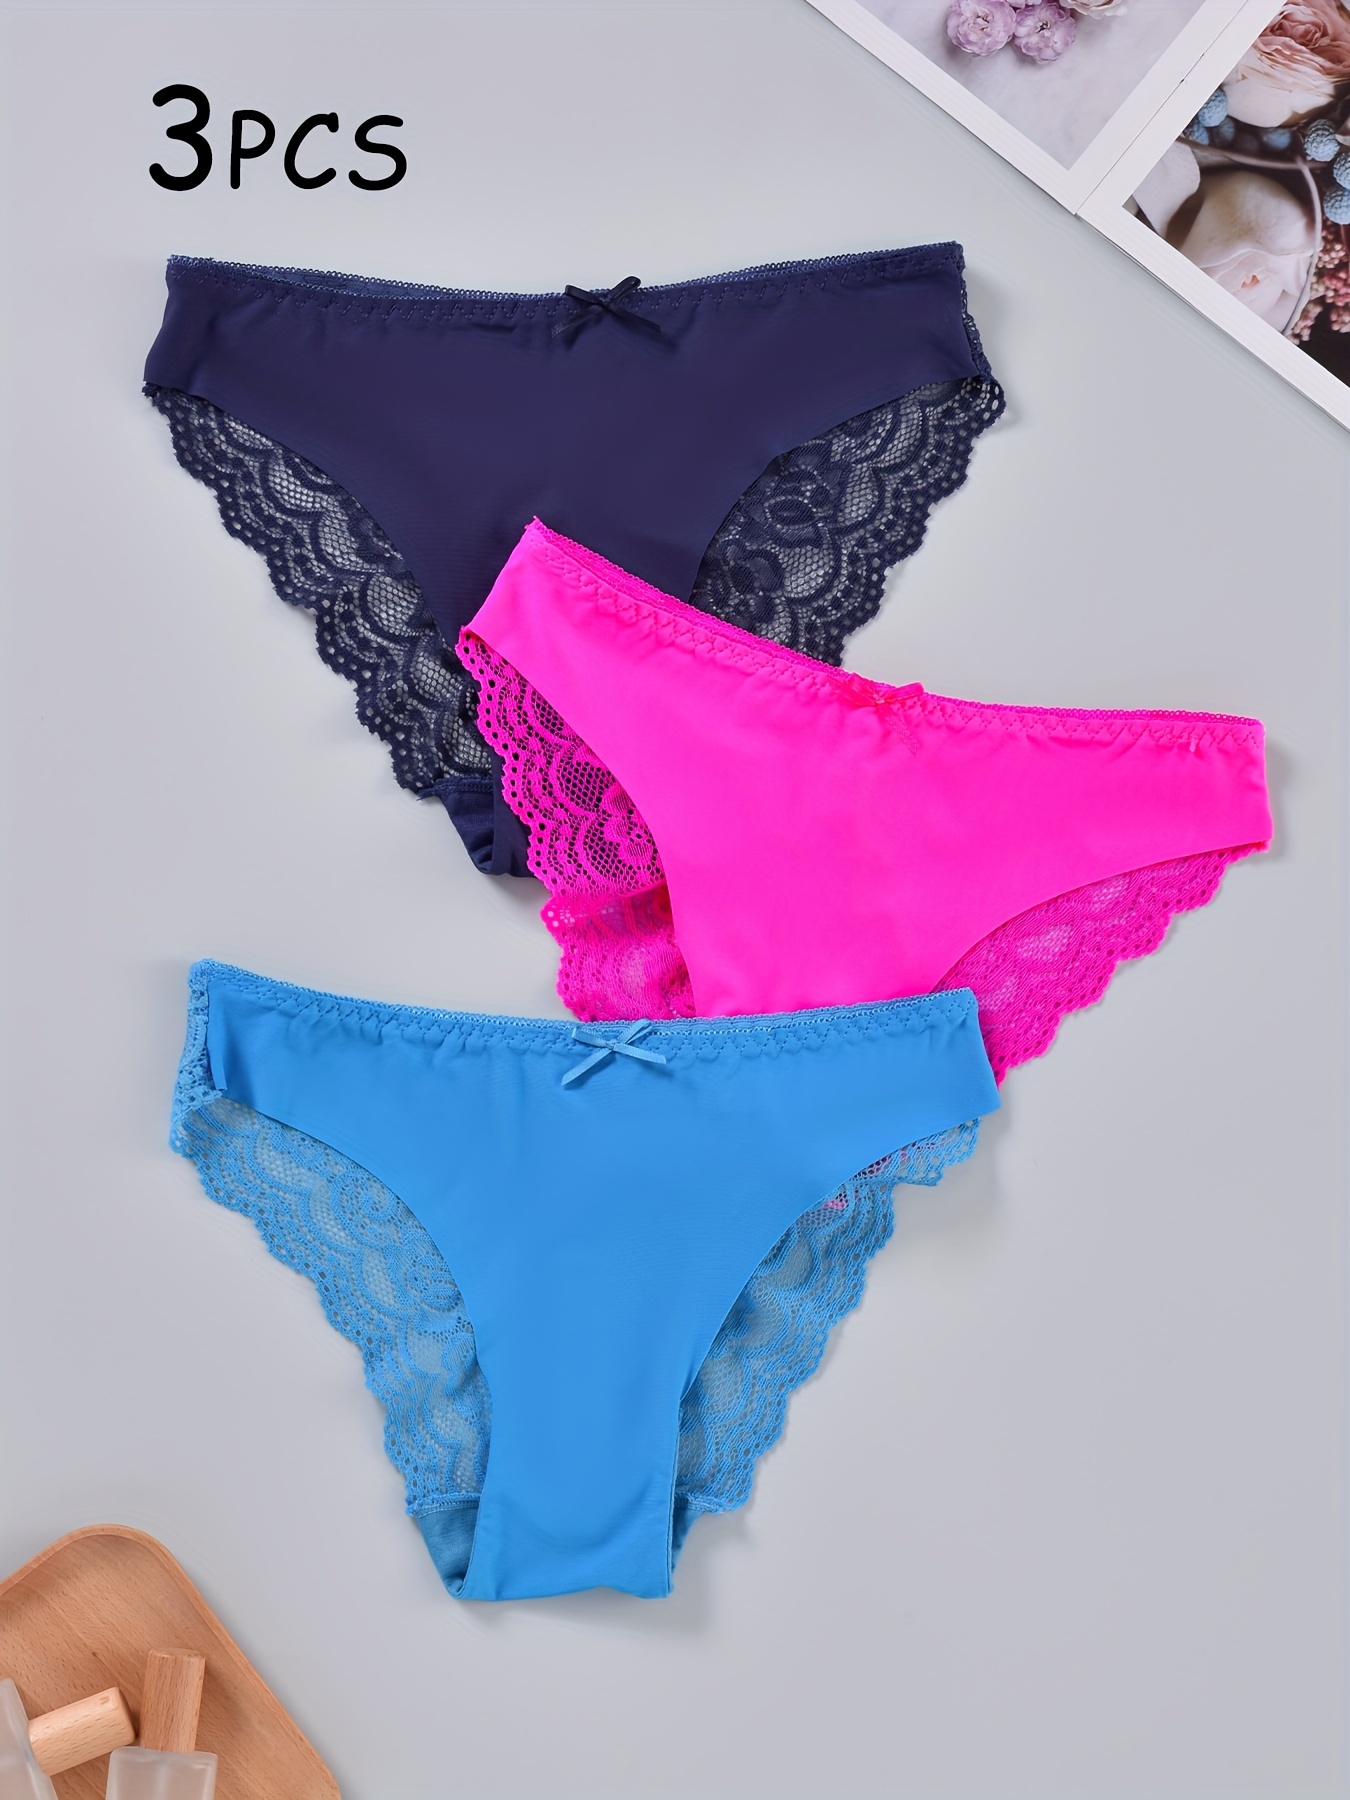 3PCS/Set Women's Panties Cotton Underwear Sexy Lace Girls Briefs